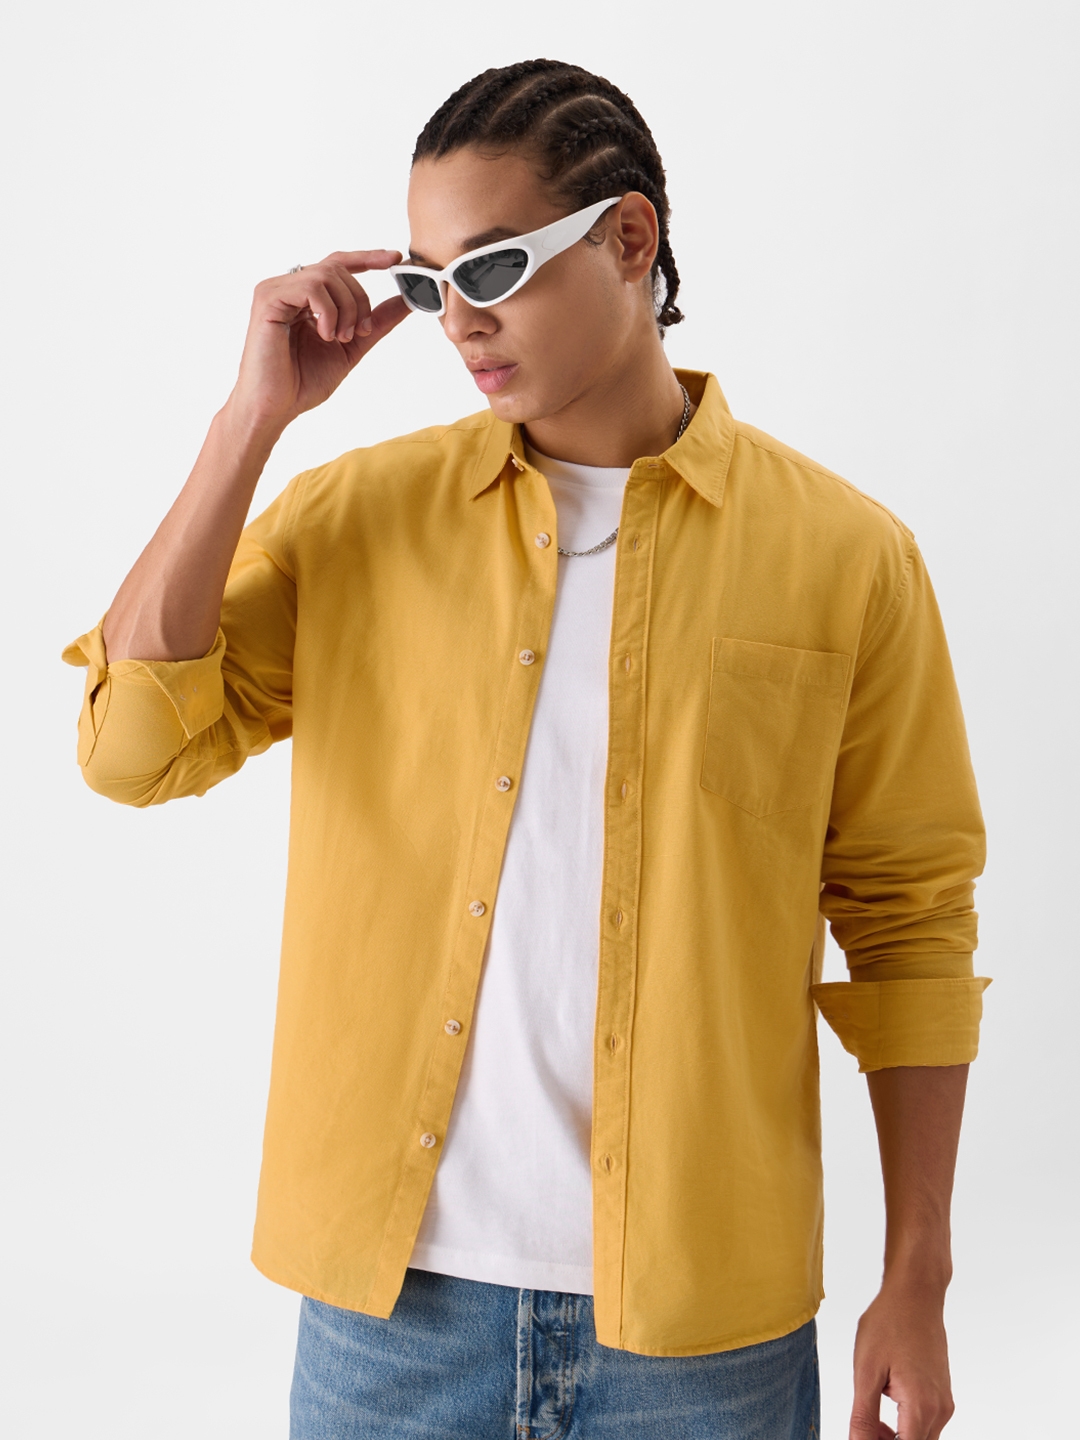 Men's Solids: Chrome Yellow Shirts